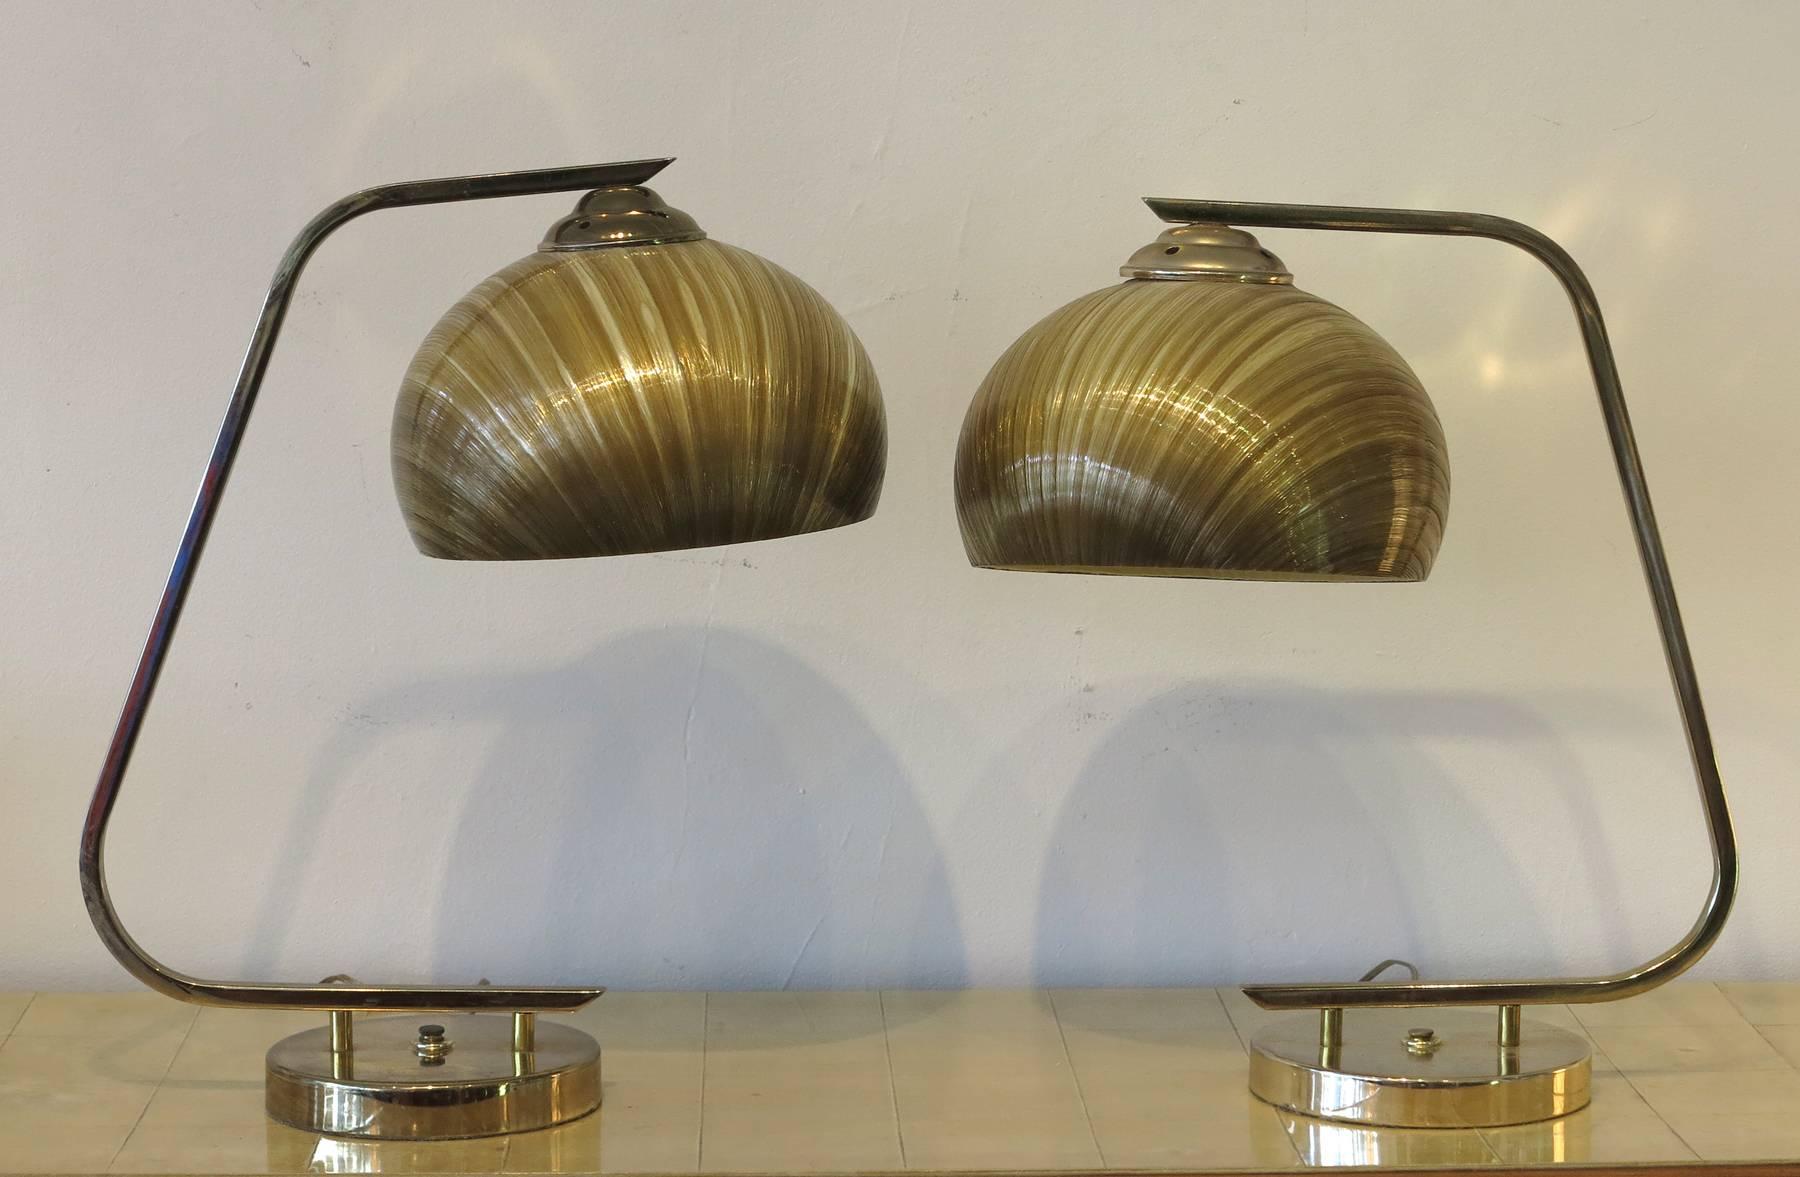 Vintage 1960s spun fiberglass shades brass bases. Have a pleasing glow when lit.